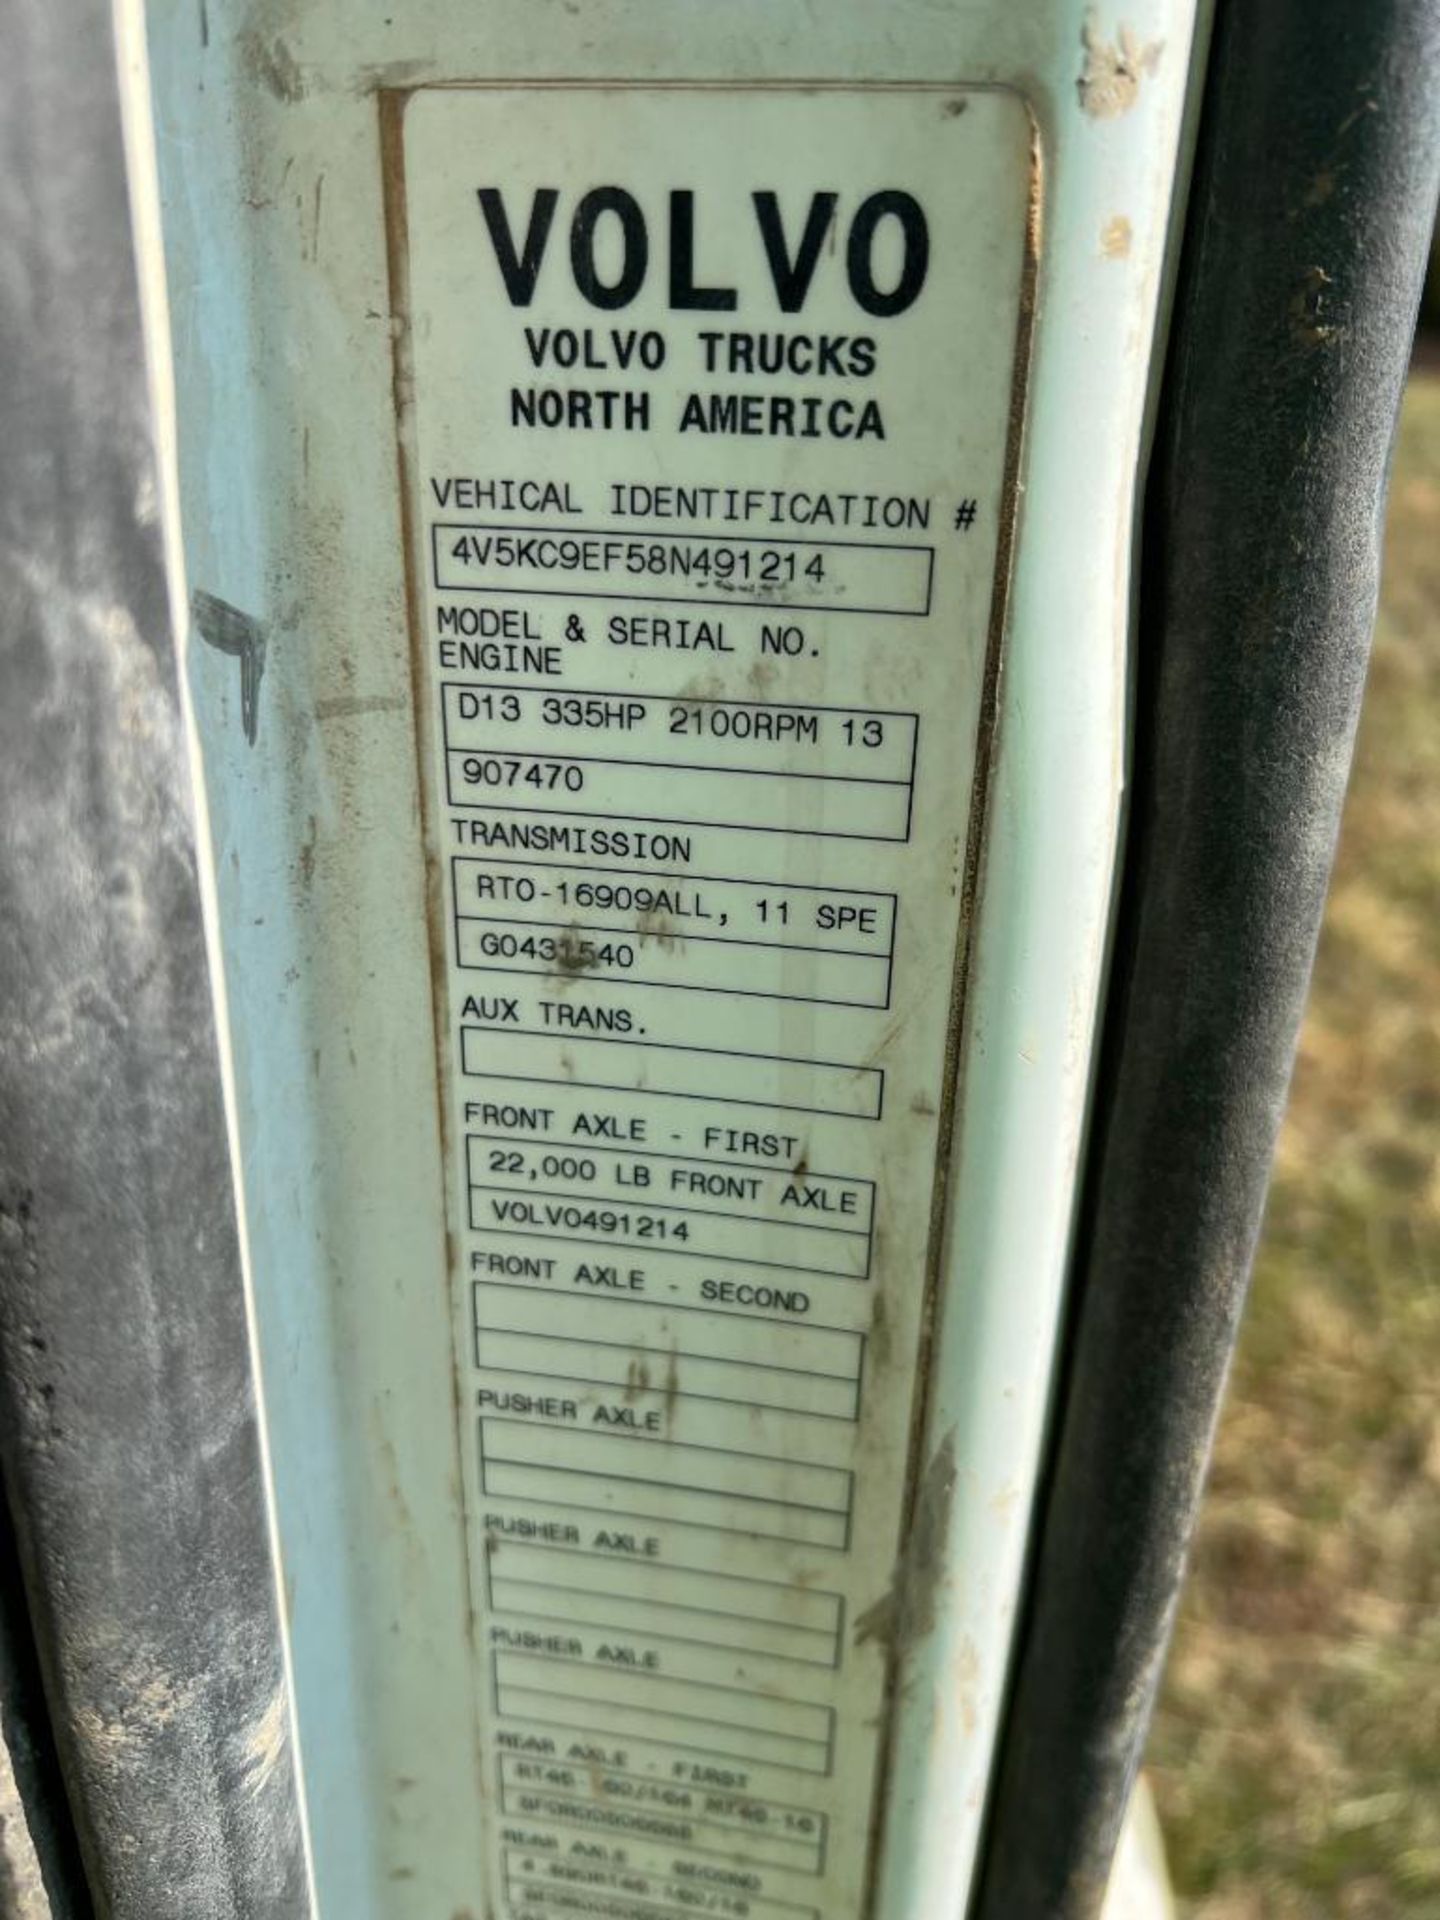 2008 Volvo Concrete Mixer, VIN #4V5KC9EF58N491214, Miles 169,044, Eaton Fuller 9 Speed RTO-16909ALL, - Image 8 of 41